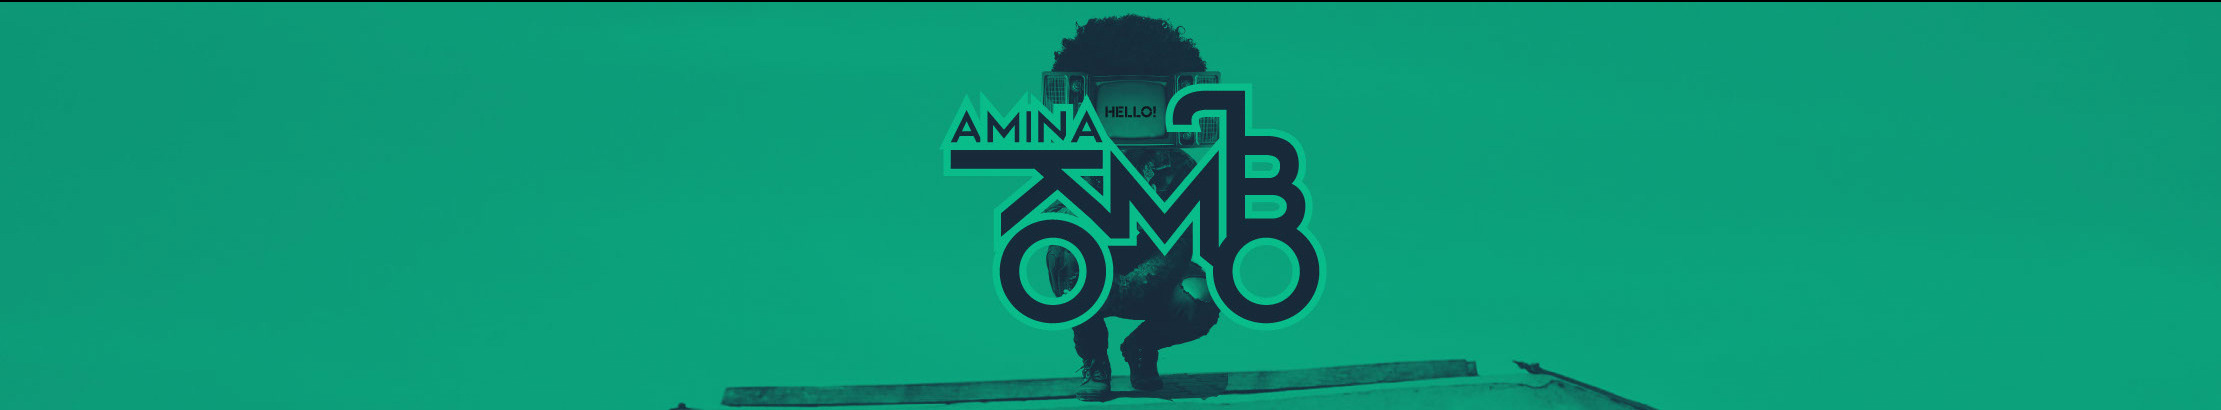 Banner de perfil de Amina Kombo